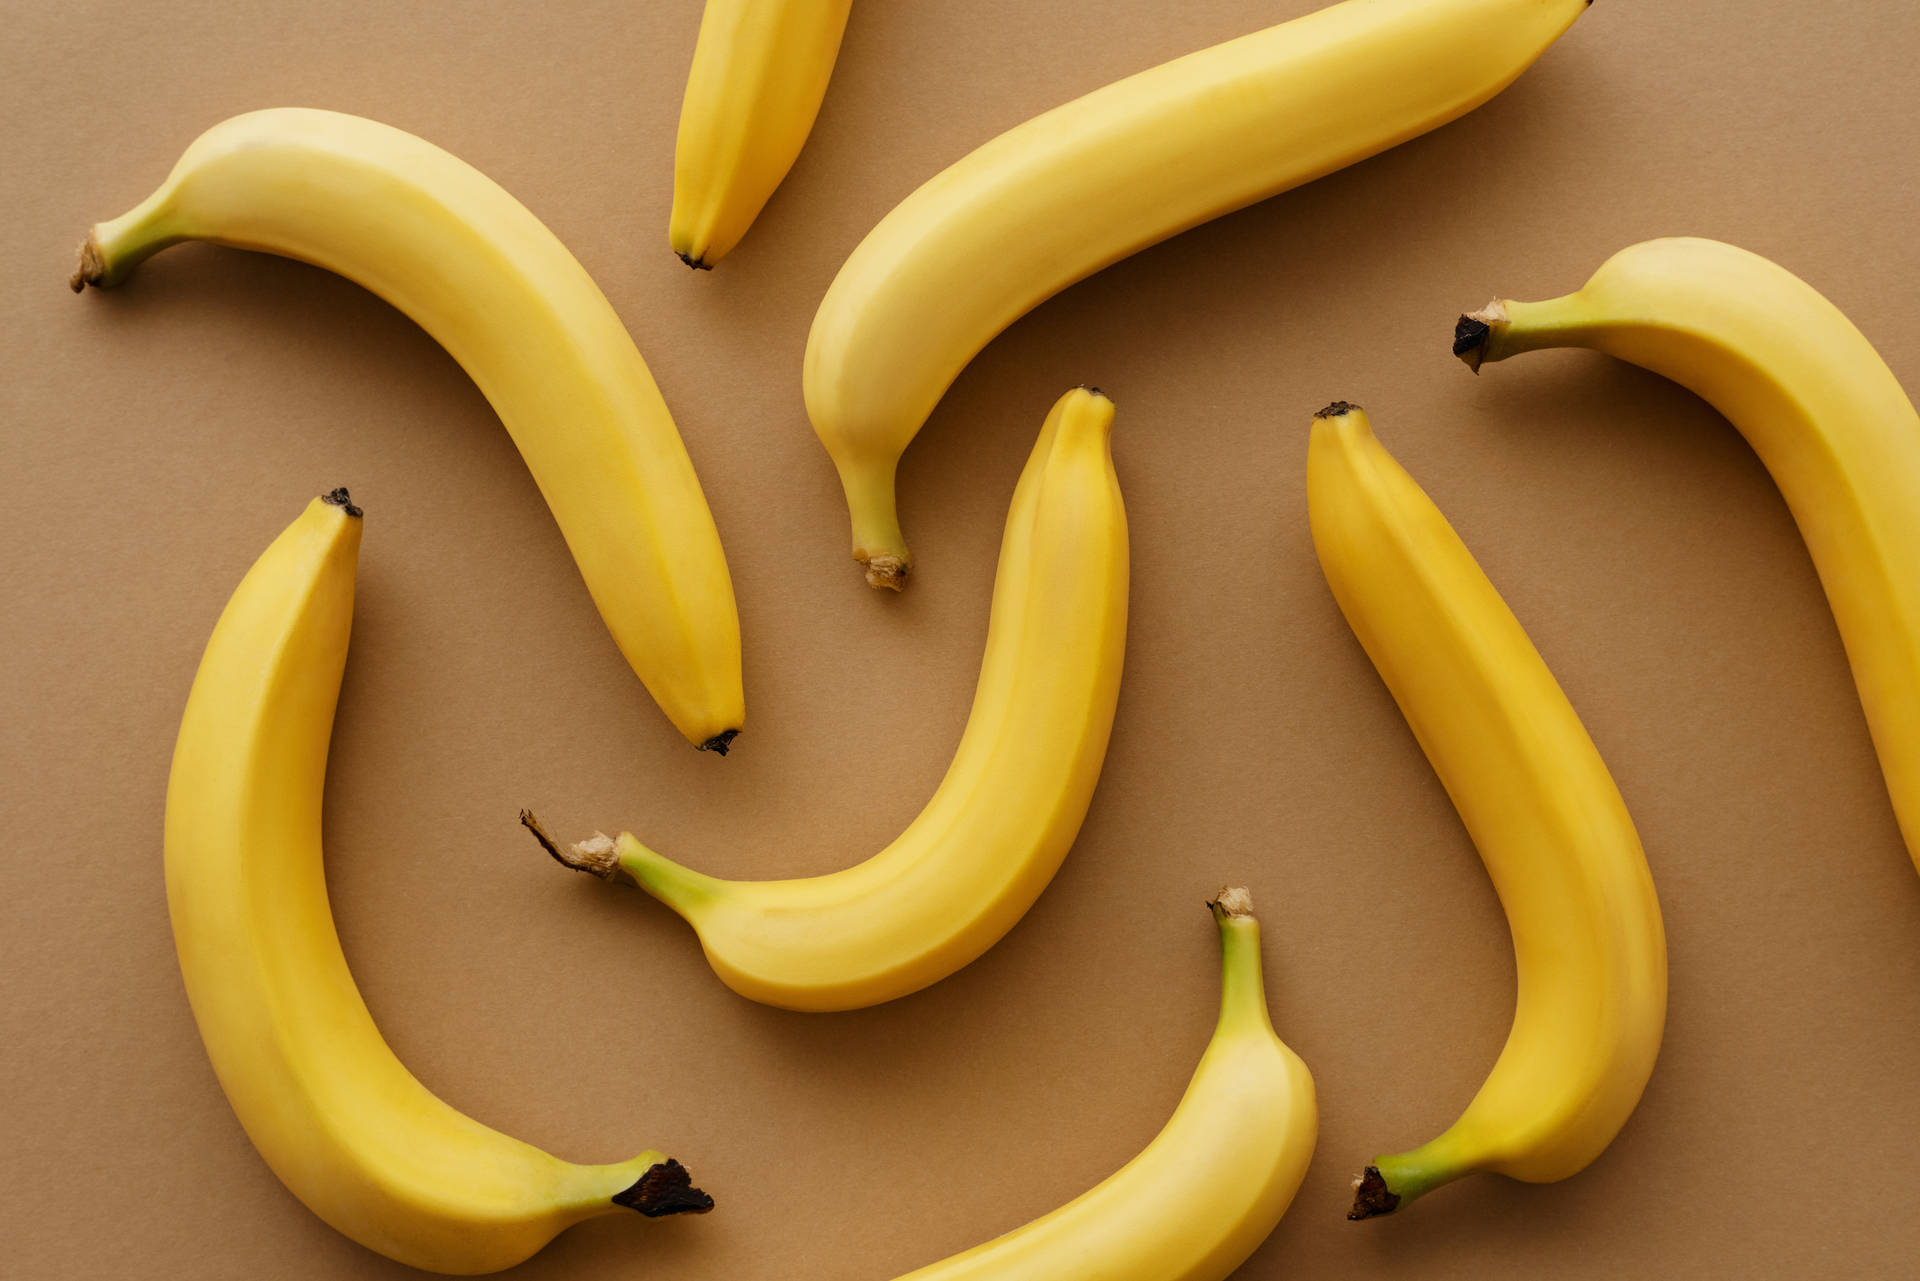 Vibrant Yellow Bananas In Disarray Background